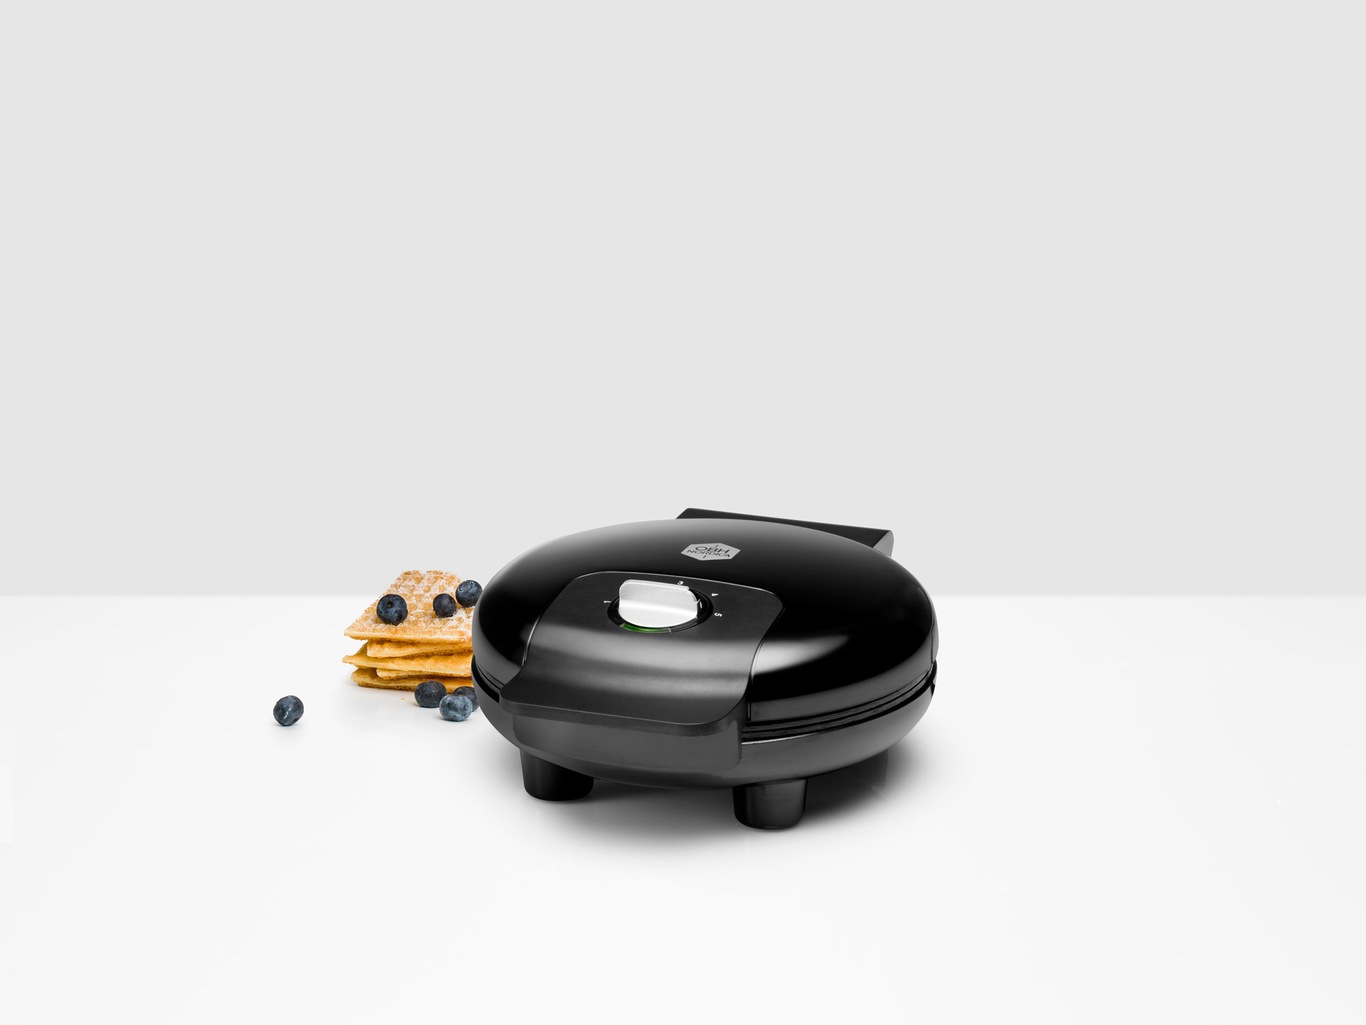 Select Waffle Iron - OBH Nordica @ RoyalDesign